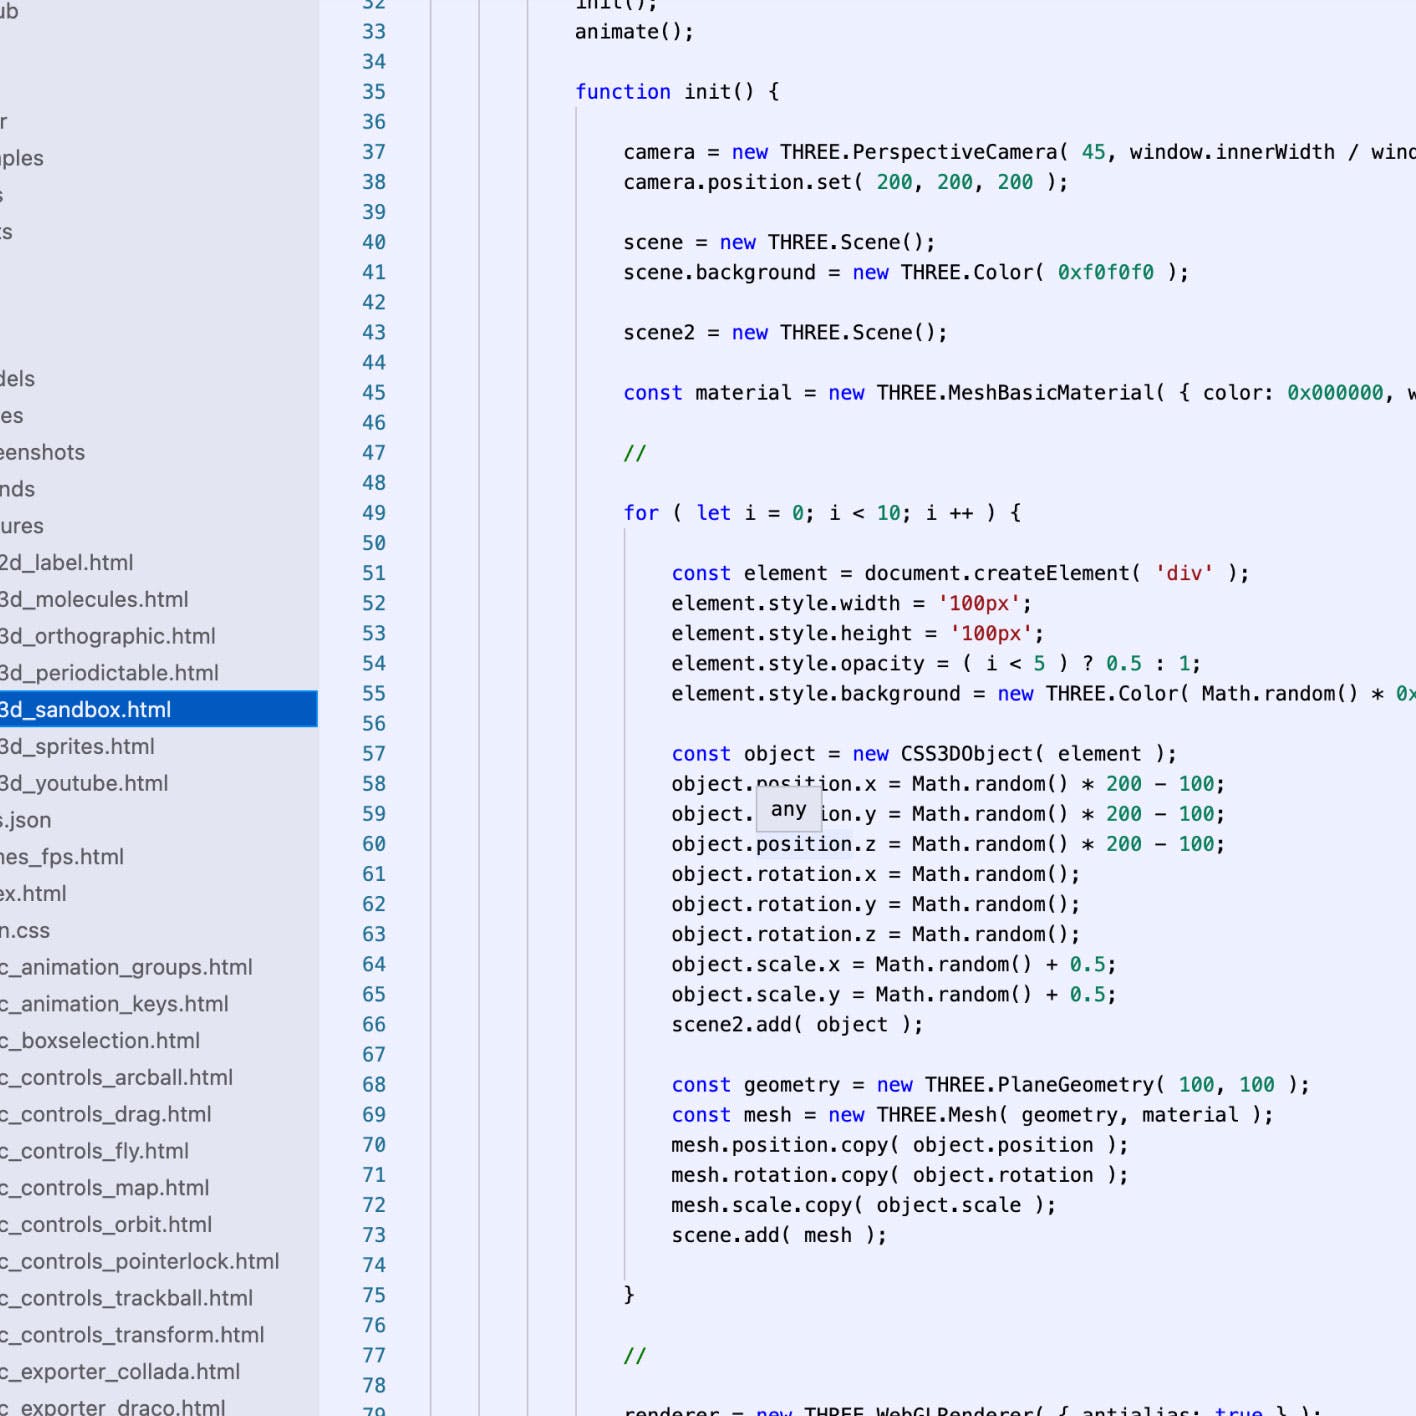 Background code in Visual Studio code editor